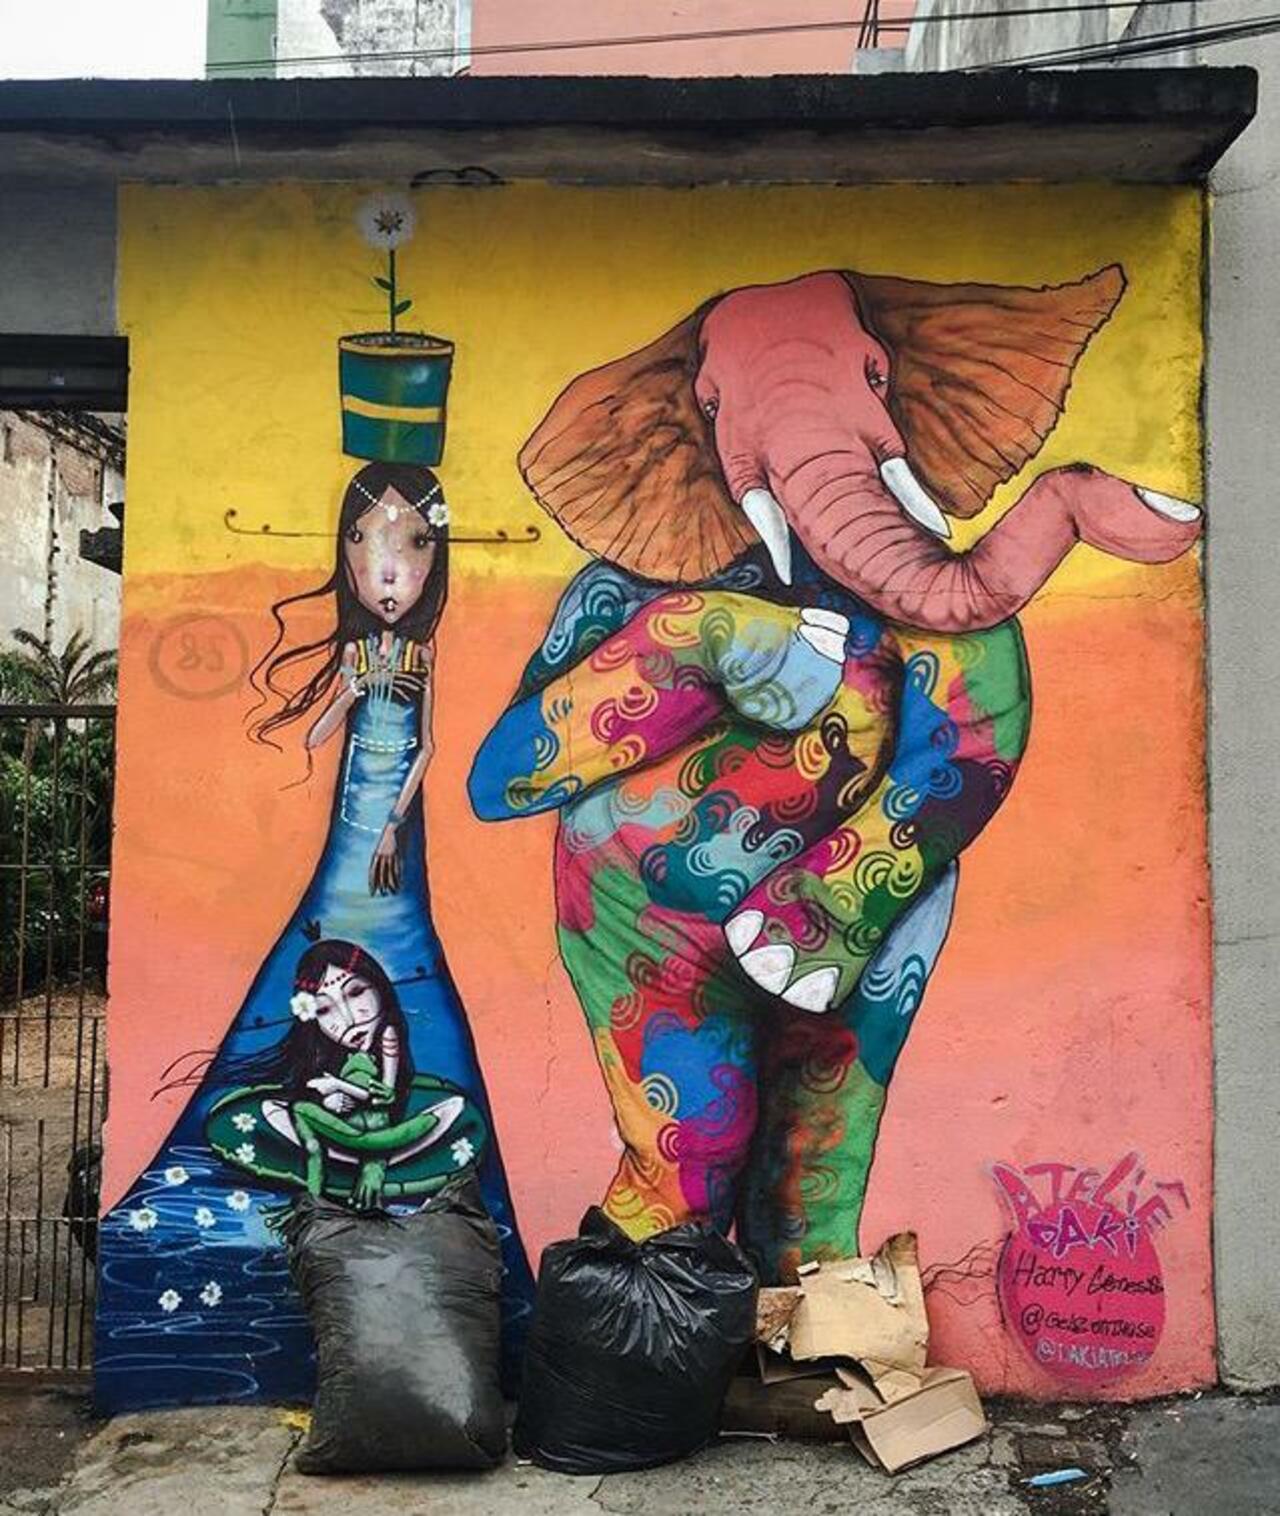 Street Art by Harry Geneis & Gelson in São Paulo 

#art #mural #graffiti #streetart http://t.co/irPI90Ycp7